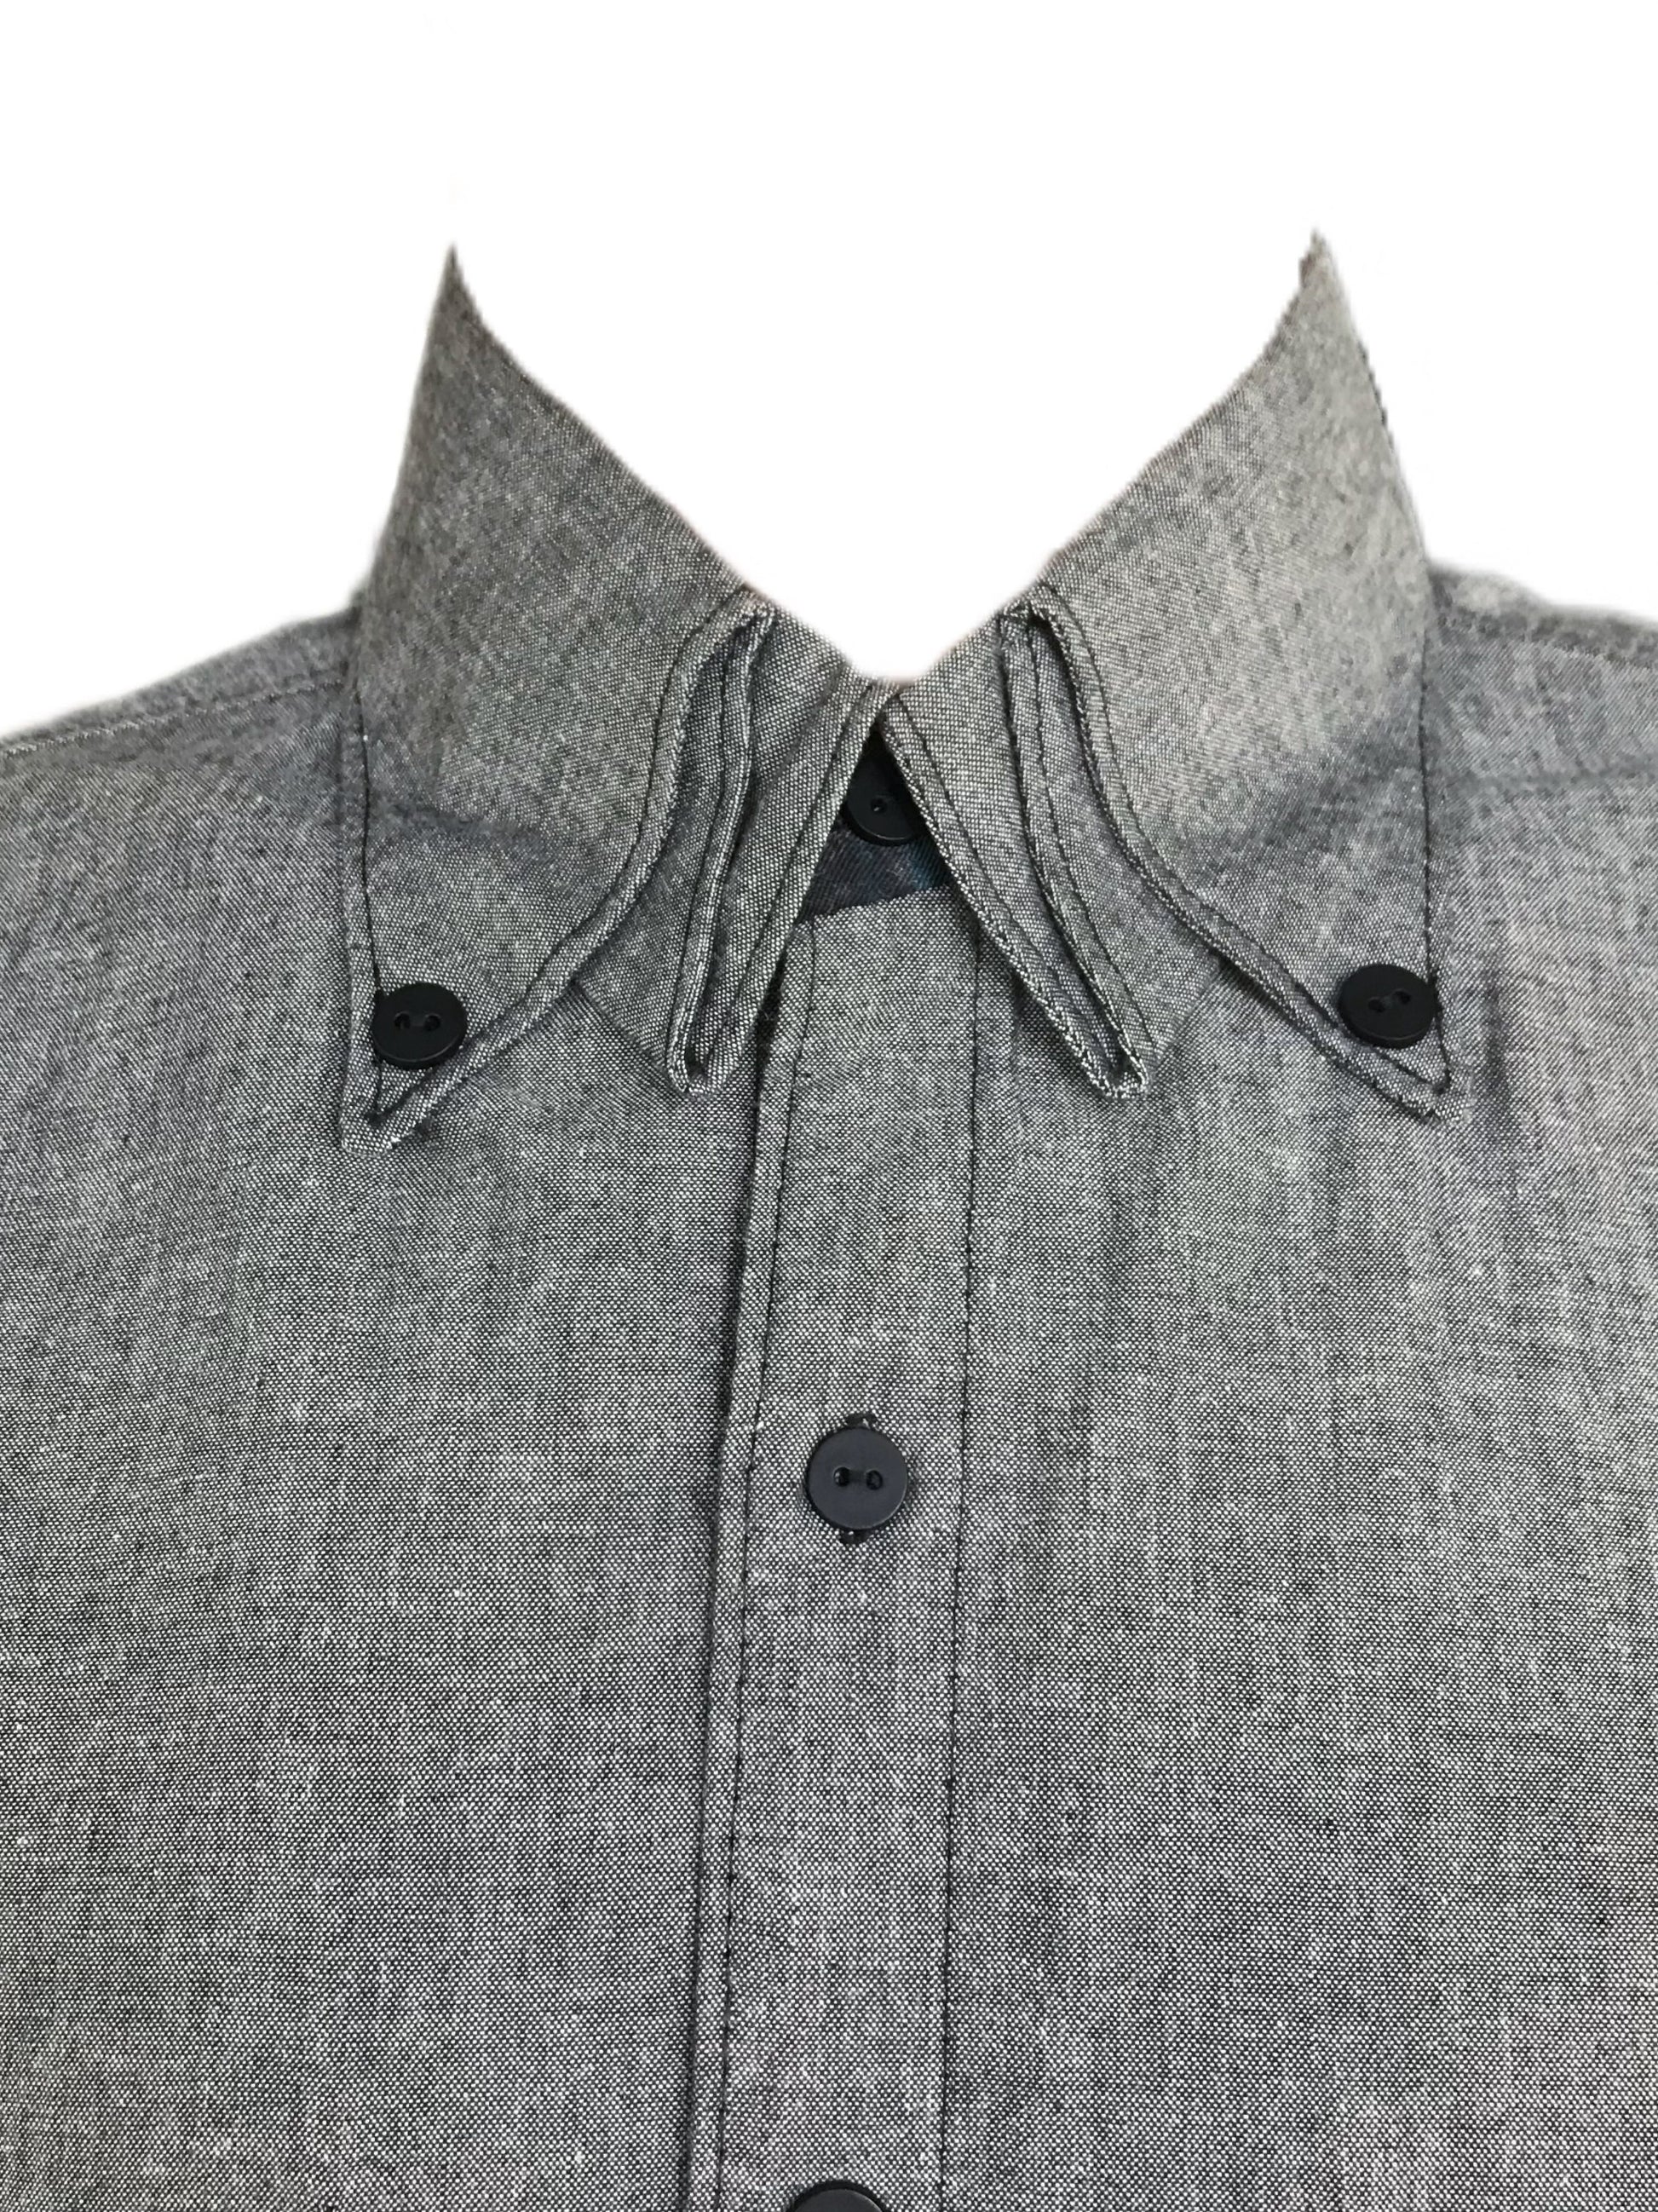 Men's Origami Collar Button Down Short Sleeve Shirt - 40 Chest